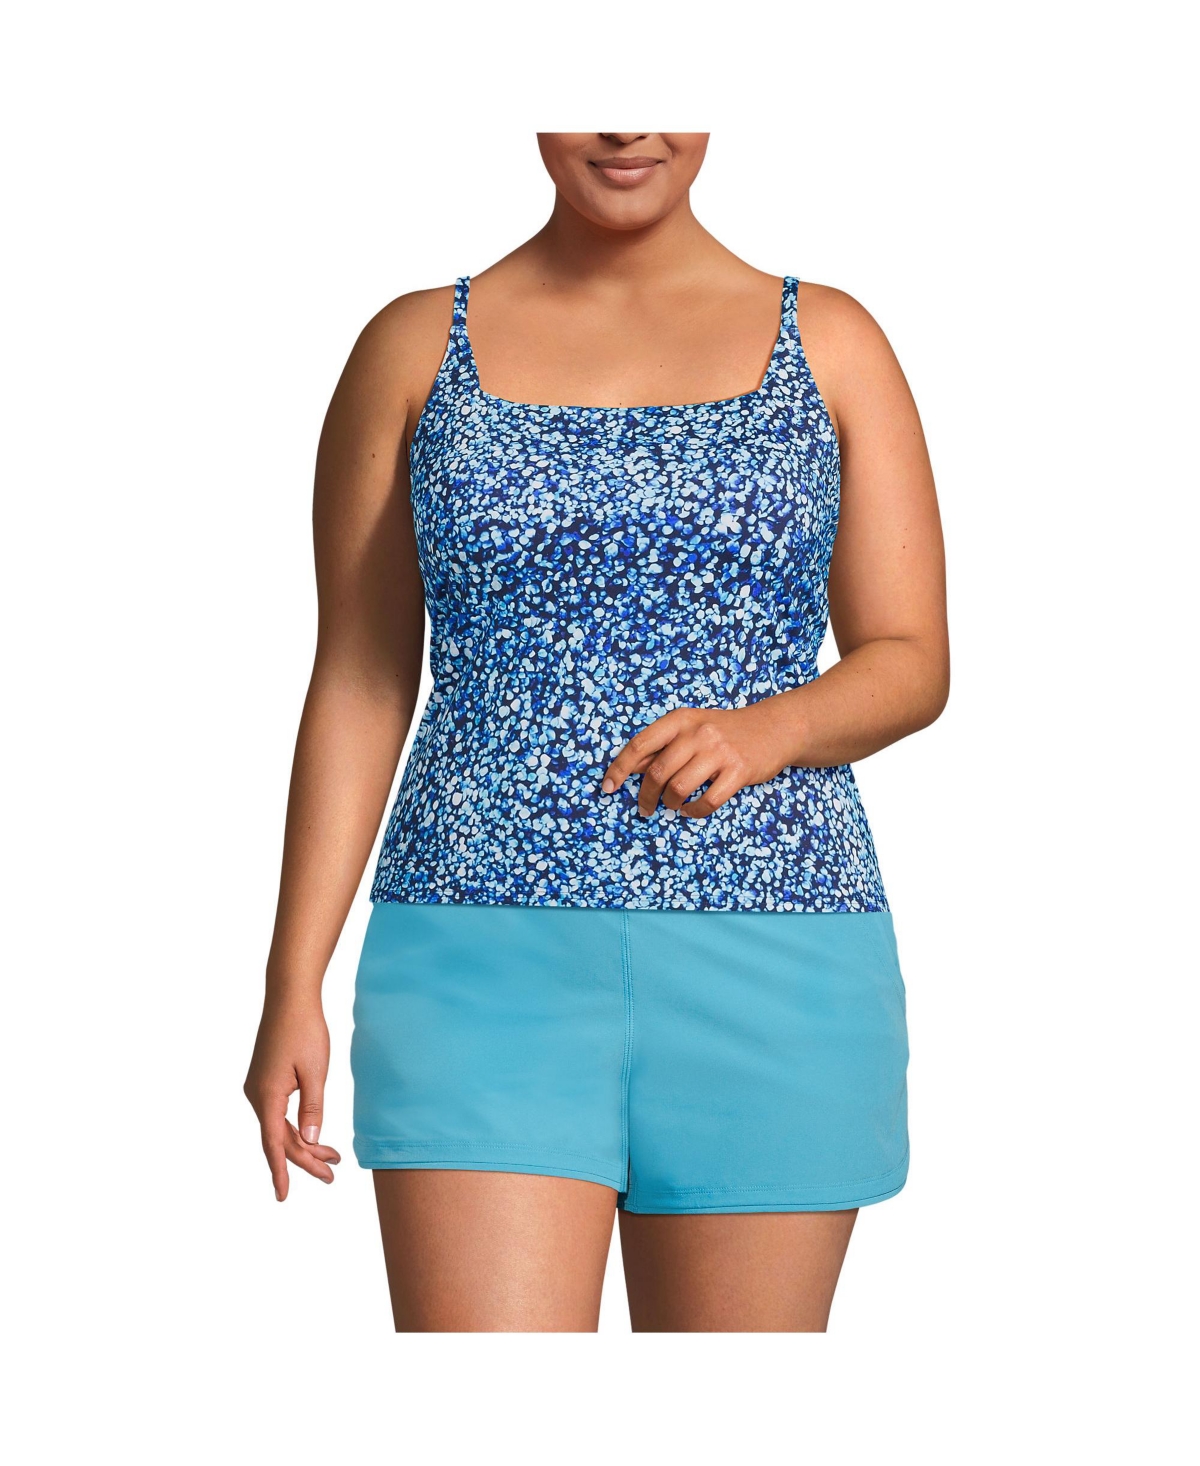 Plus Size Chlorine Resistant Square Neck Tankini Swimsuit Top - Turquoise water stripe